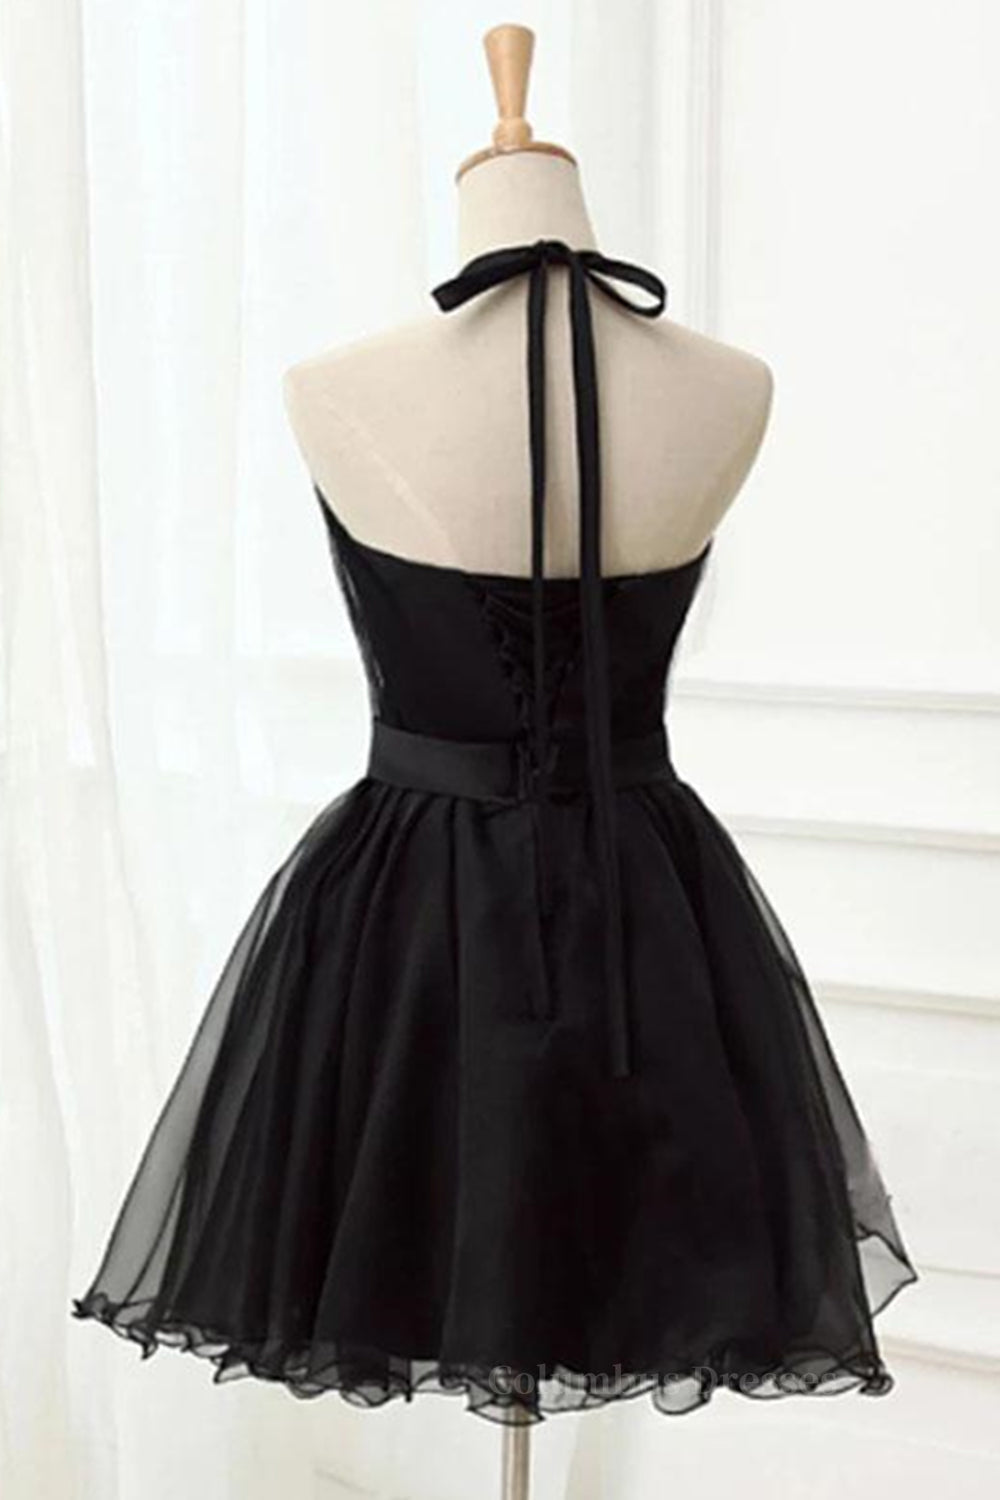 Party Dresses And Jumpsuits, Halter Neck Backless Black Short Prom Dress, Open Back Black Homecoming Dress